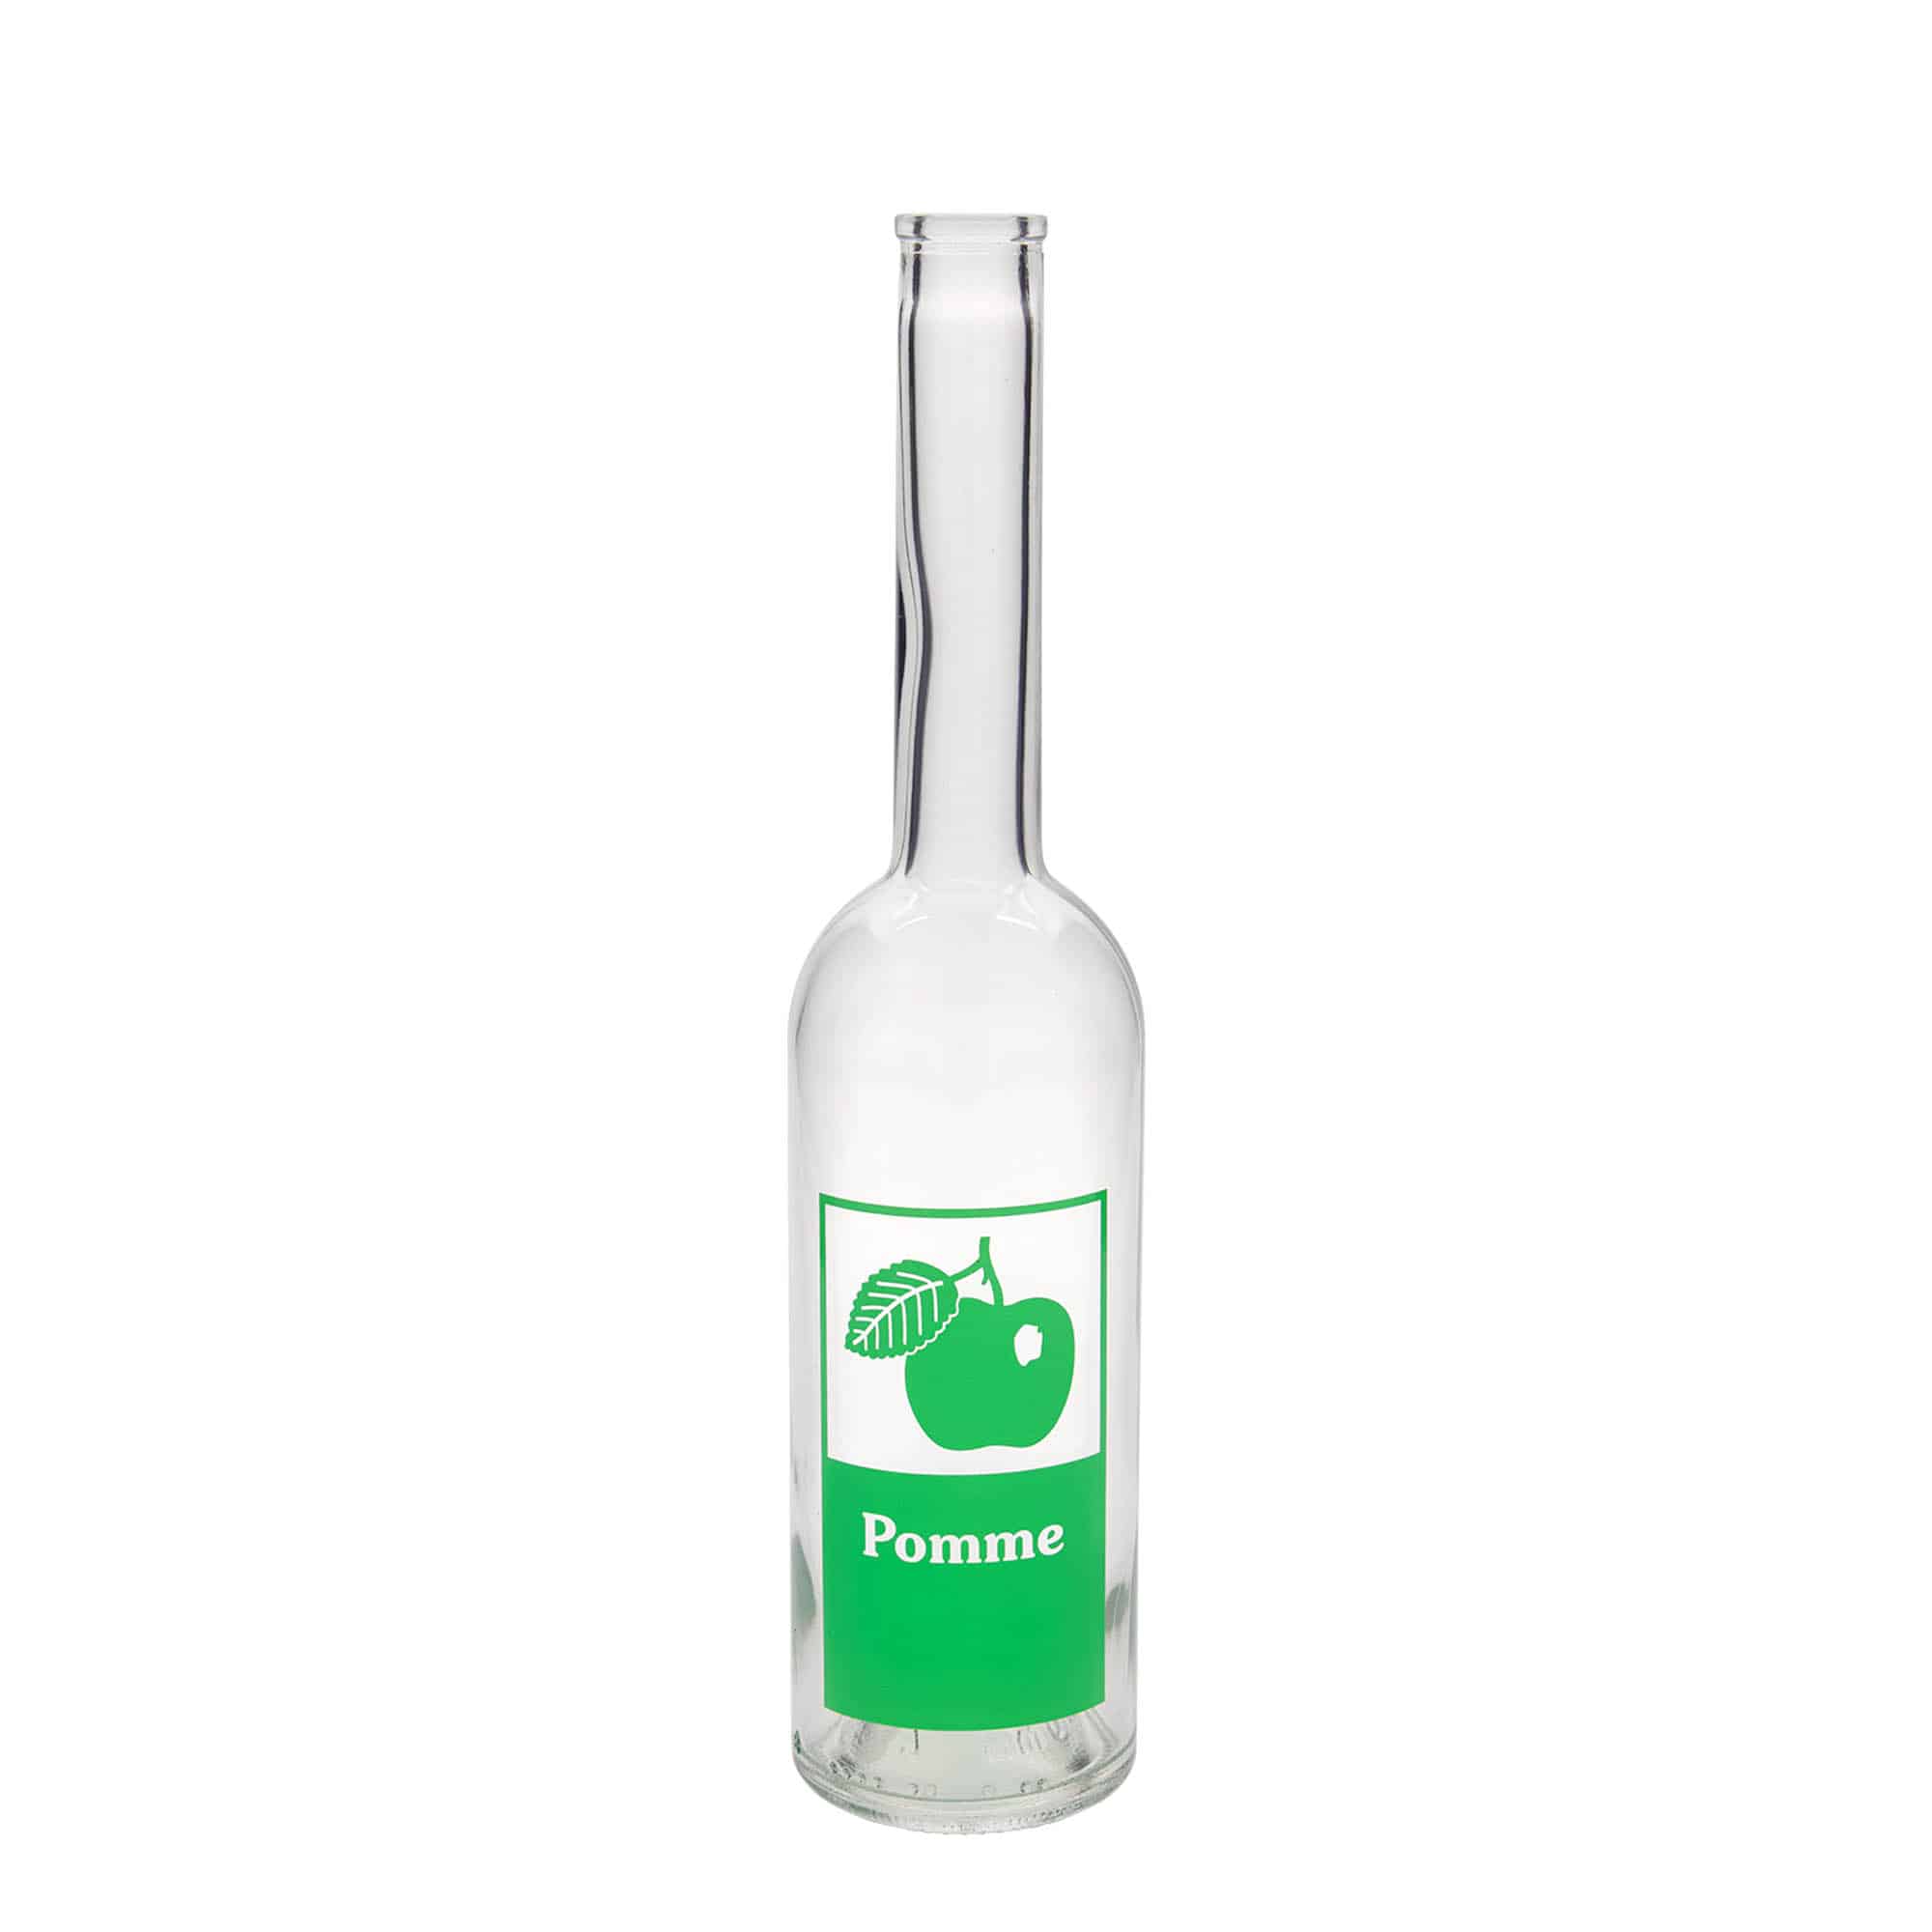 500 ml glass bottle 'Opera', print: Pomme, closure: cork